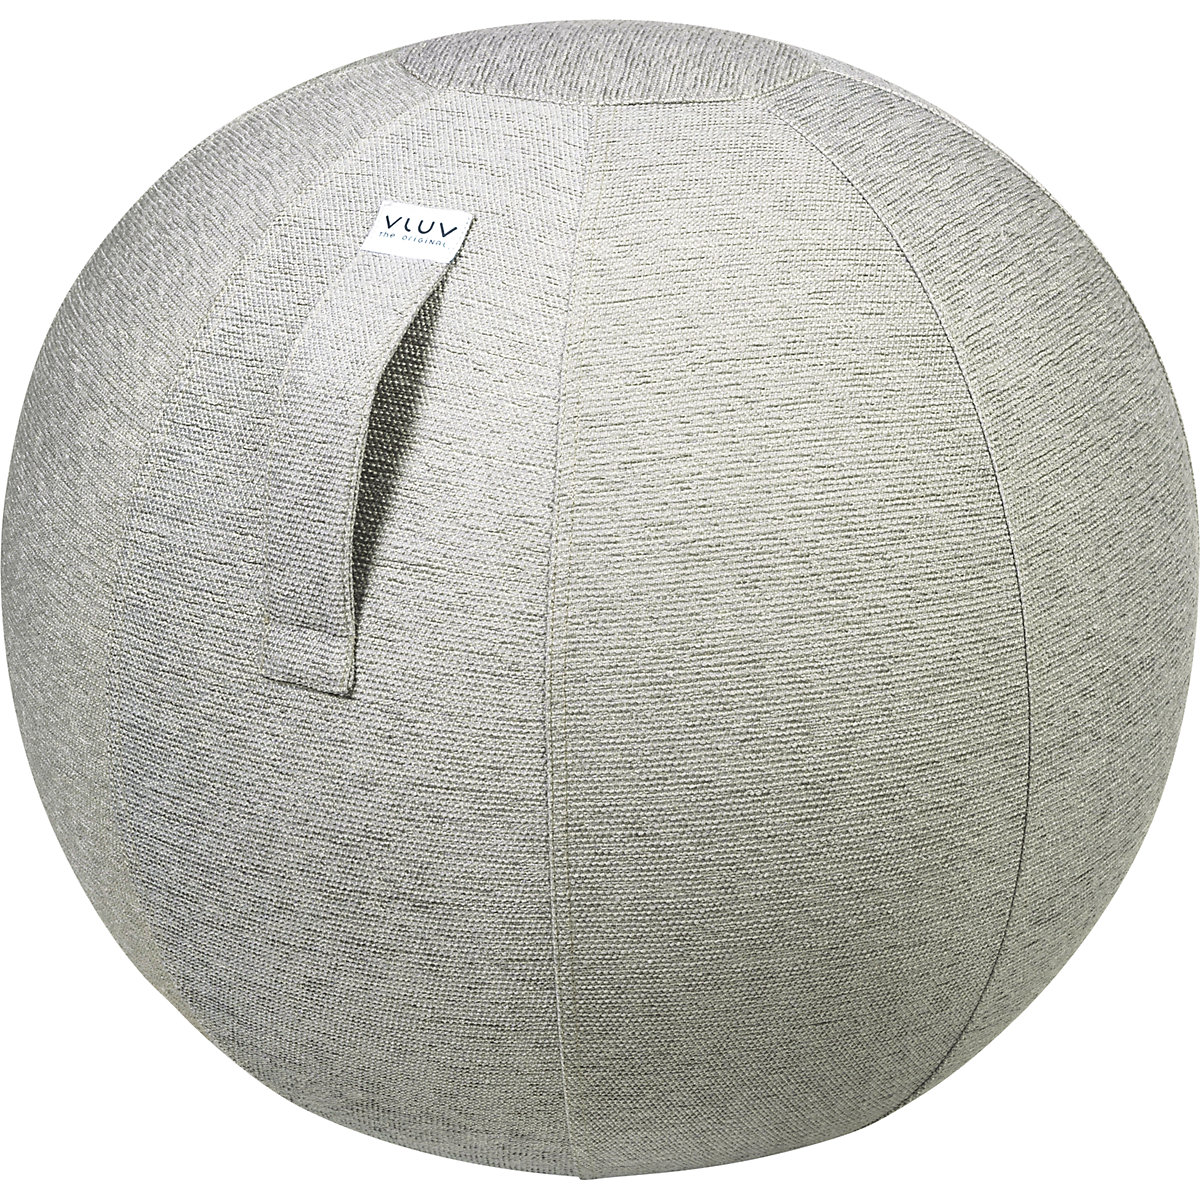 STOV Swiss ball – VLUV, fabric version, 600 – 650 mm, cement grey